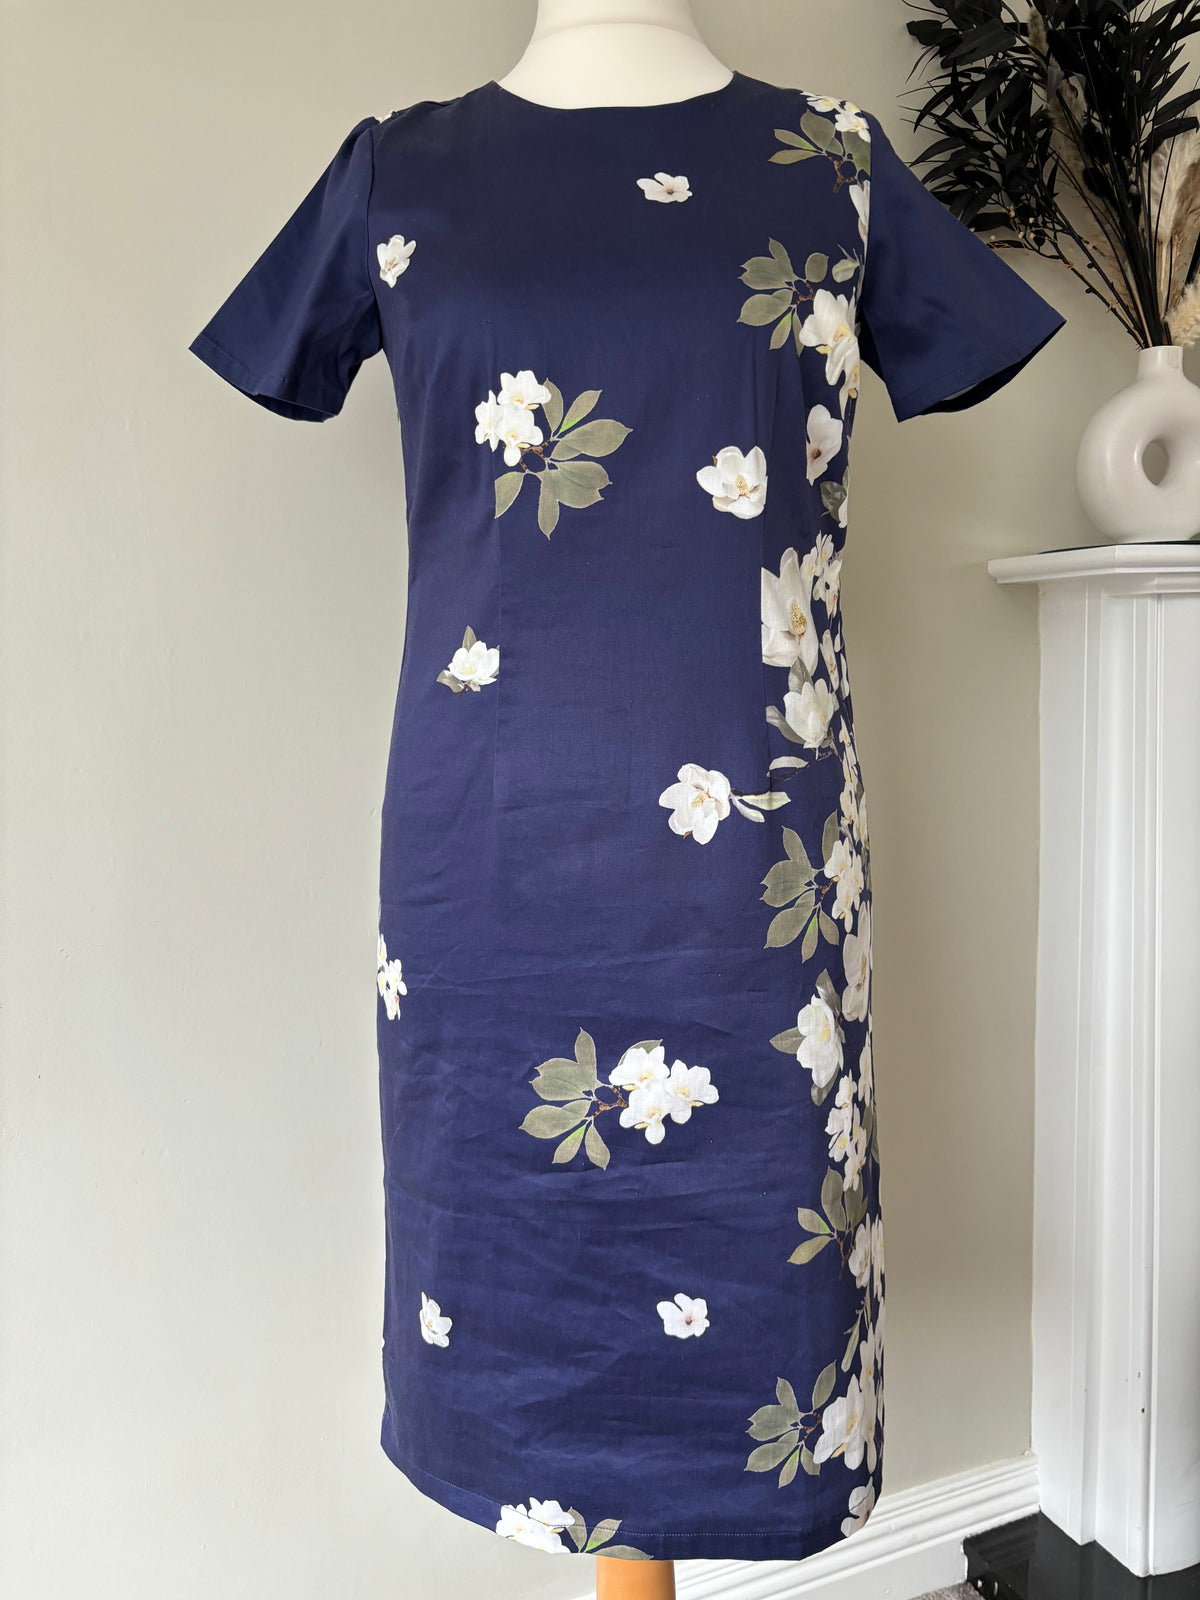 Floral print short sleeve dress Size 10 Witt freemans